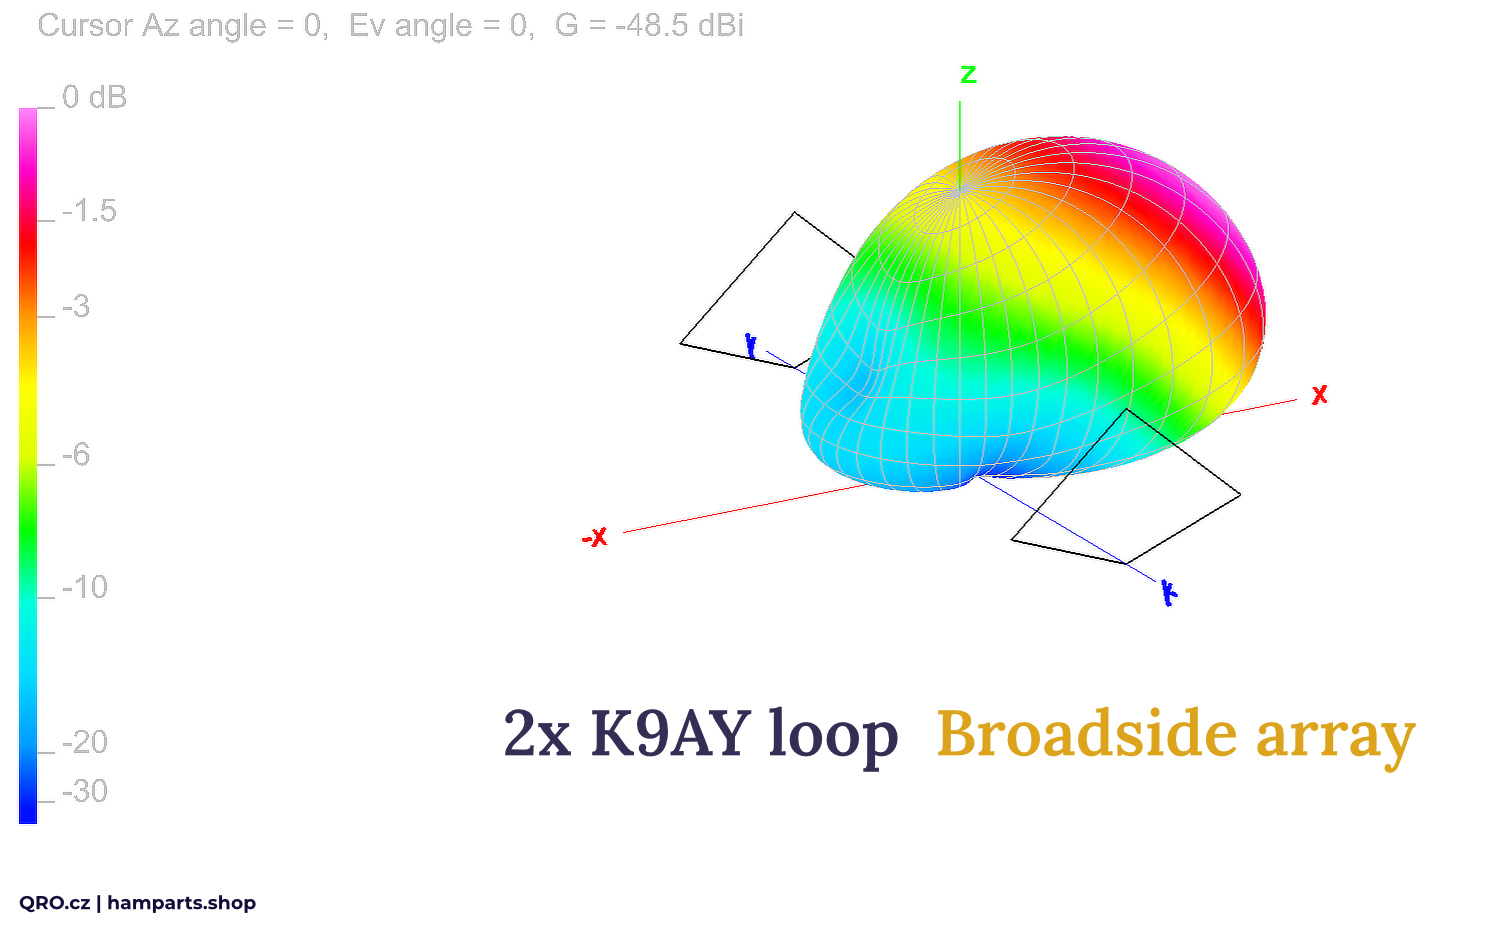 k9ay broadside array by qro.cz hamparts.shop